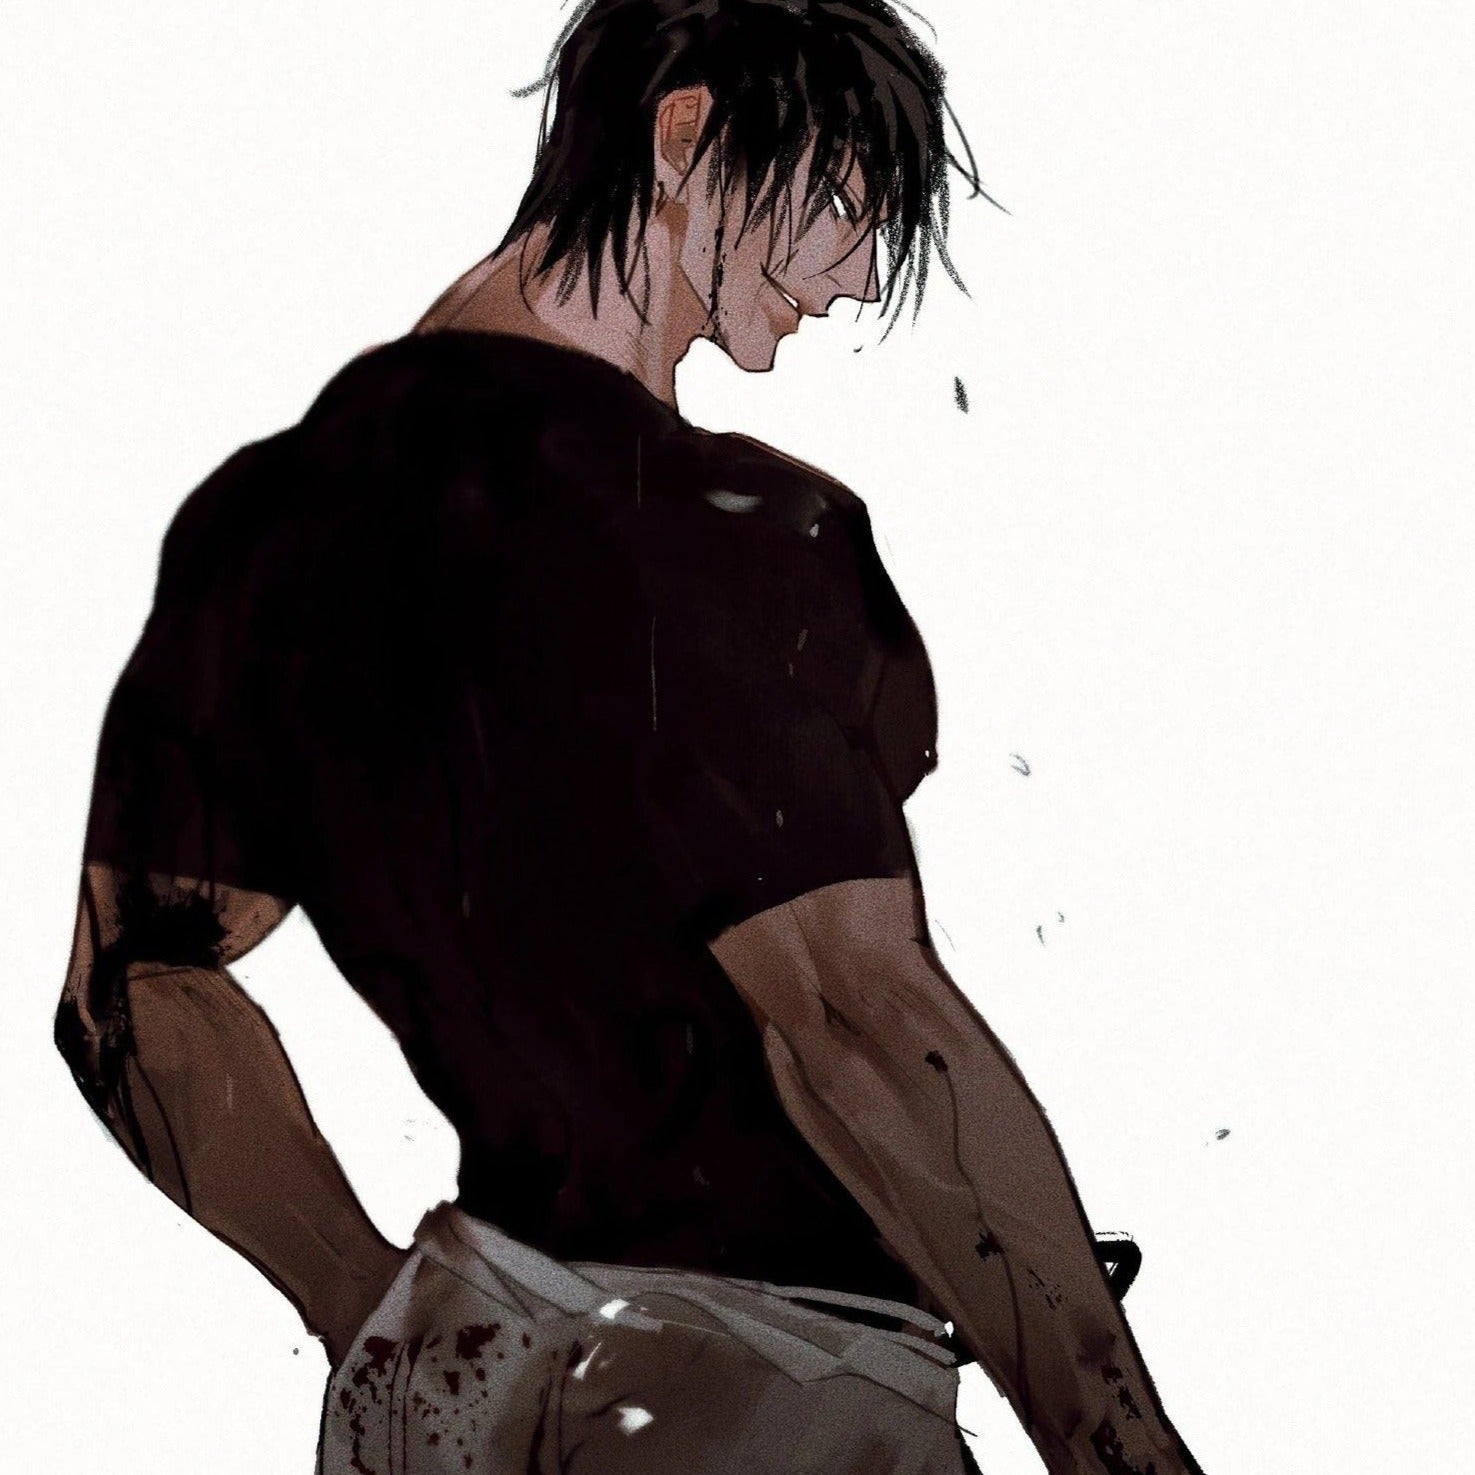 Toji Fushiguro wearing black t-shirt and white trousers. Showcasing back and arm muscles